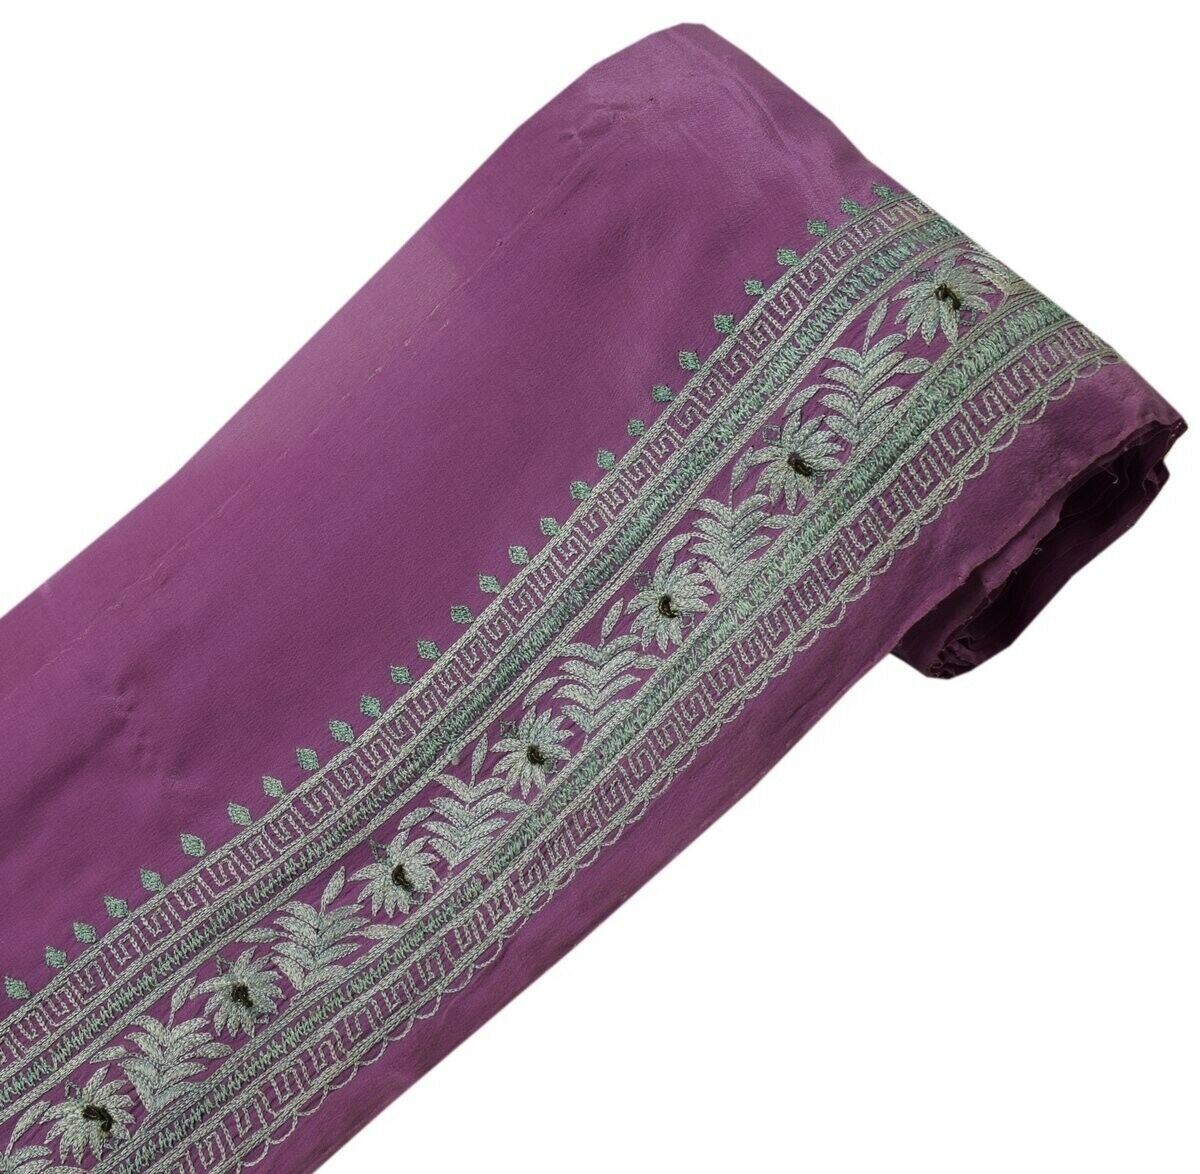 Vintage Sari Border Indian Craft Trim Embroidered Purple Sewing Ribbon Lace